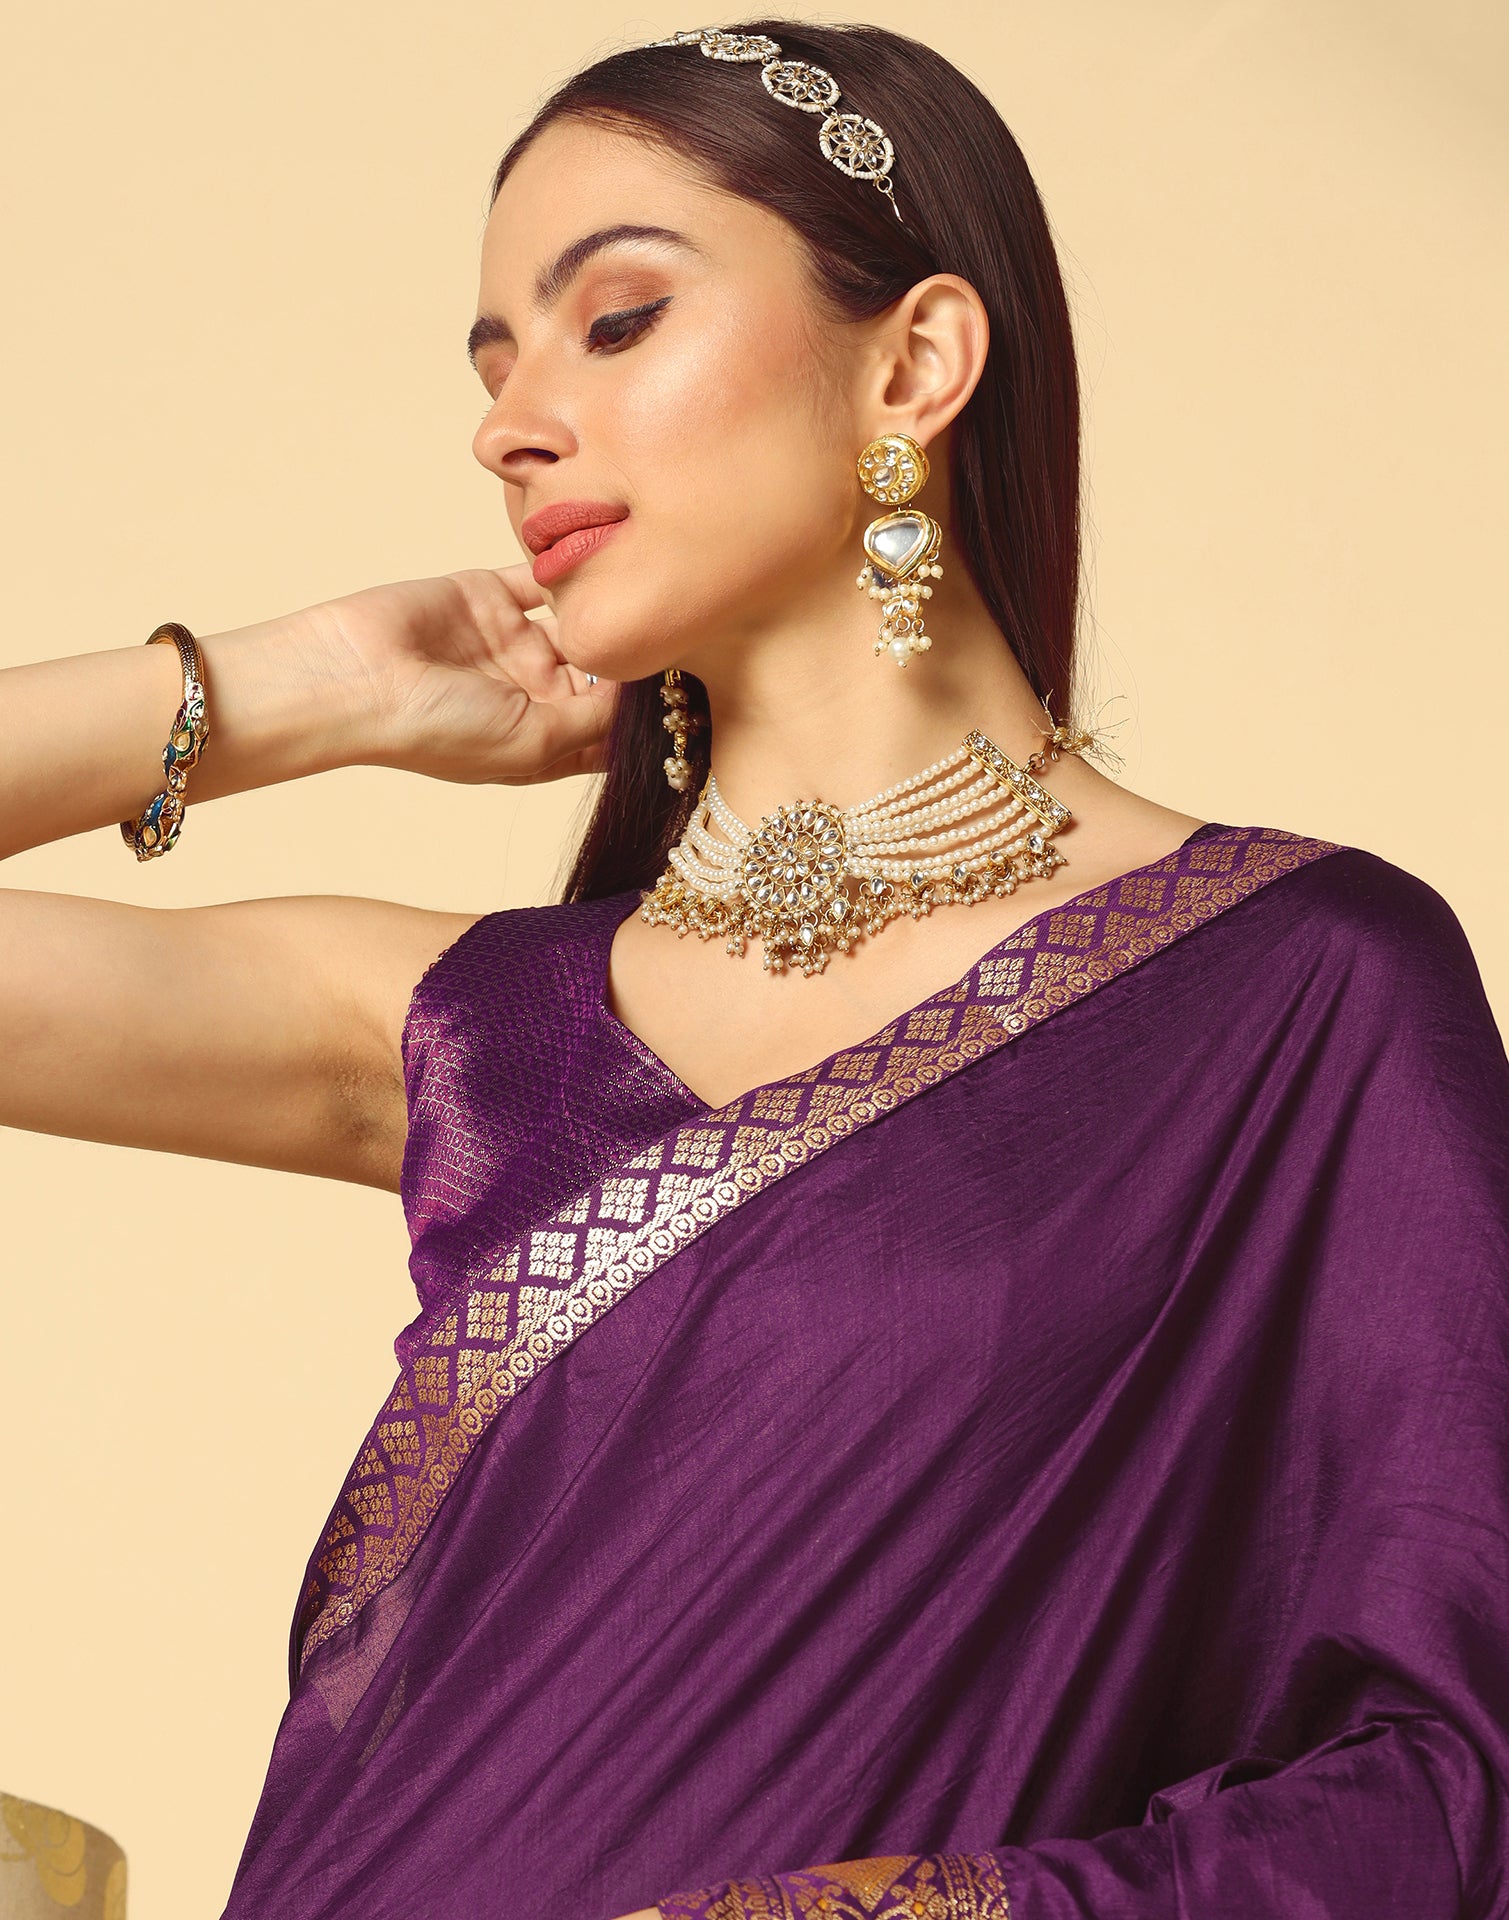 Woman Solid Plain Purple color Saree With Lace Border : Amazon.in: Fashion